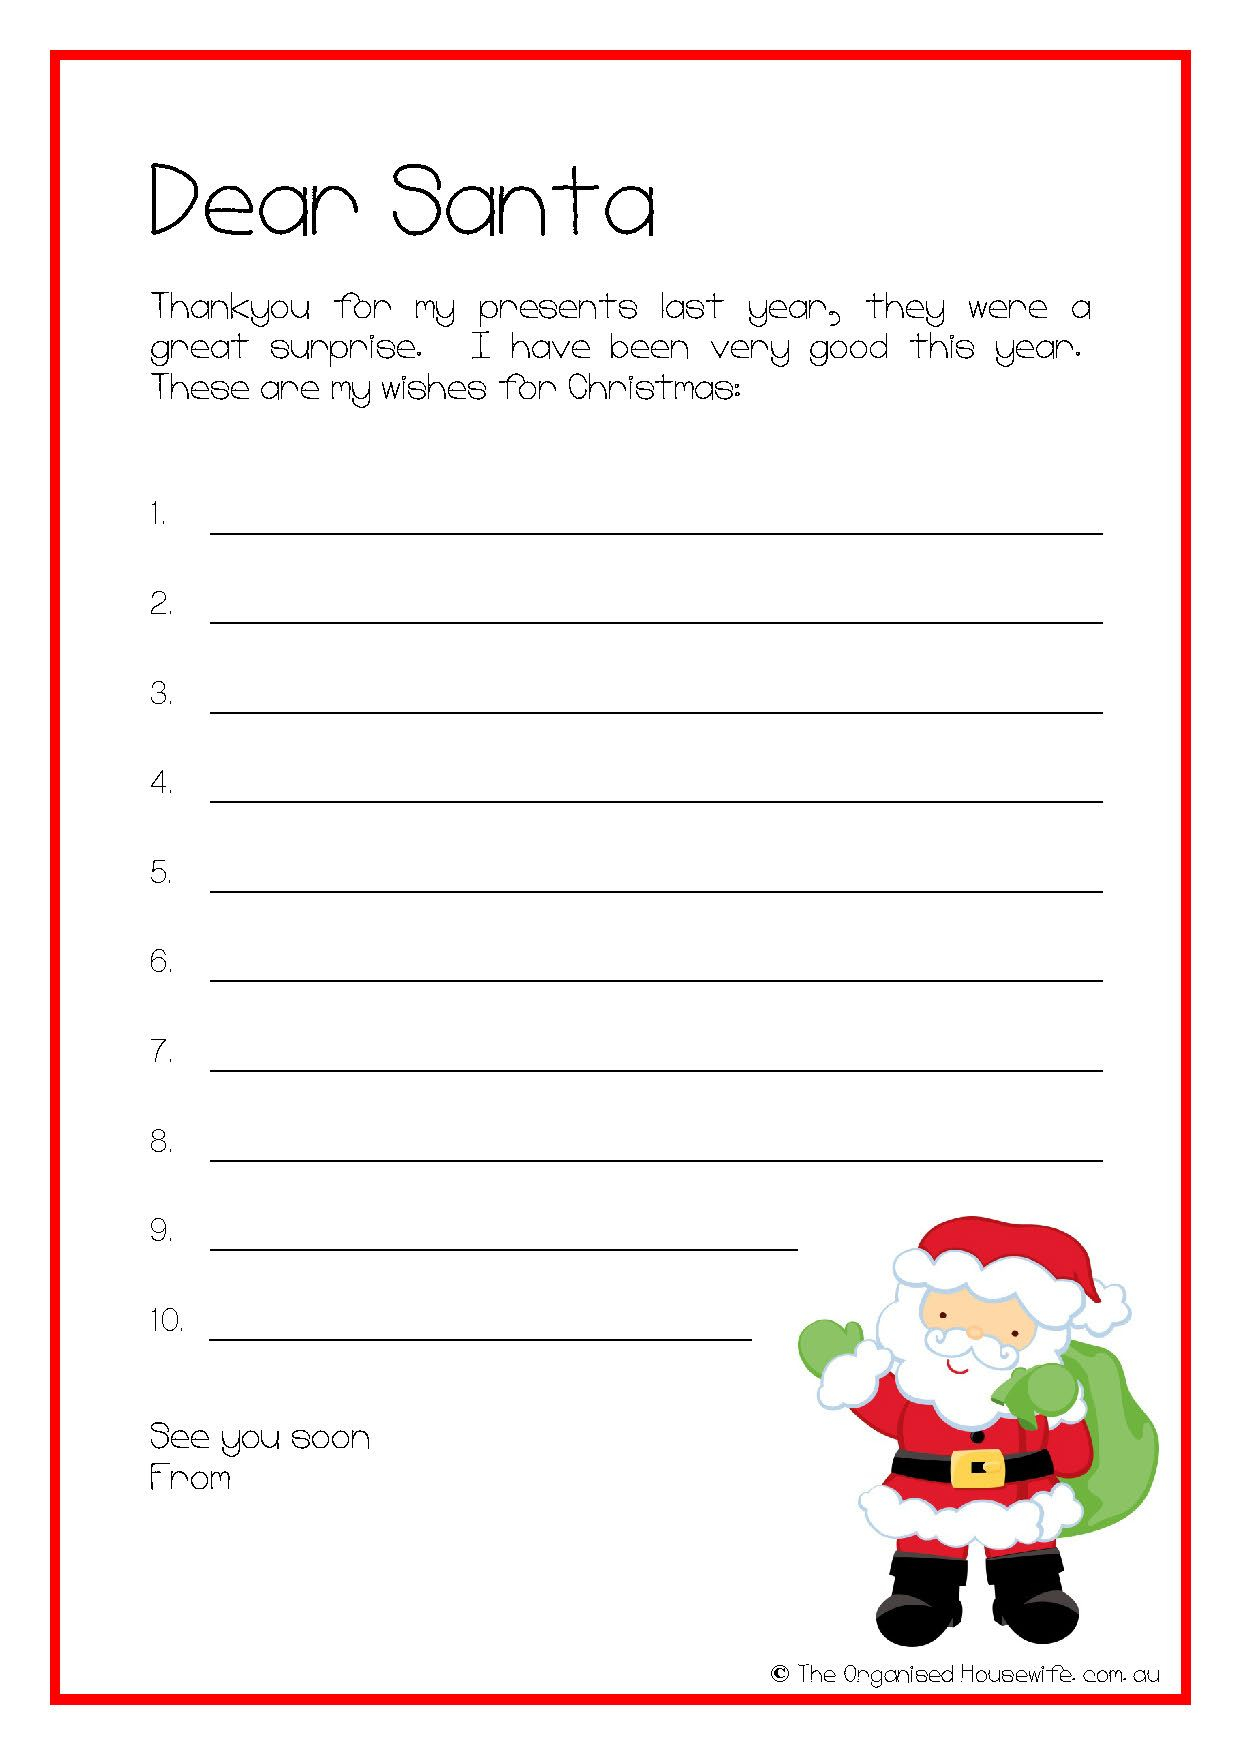 Christmas Letter From Santa Template - Printable Kids Wish List to Santa Pinterest